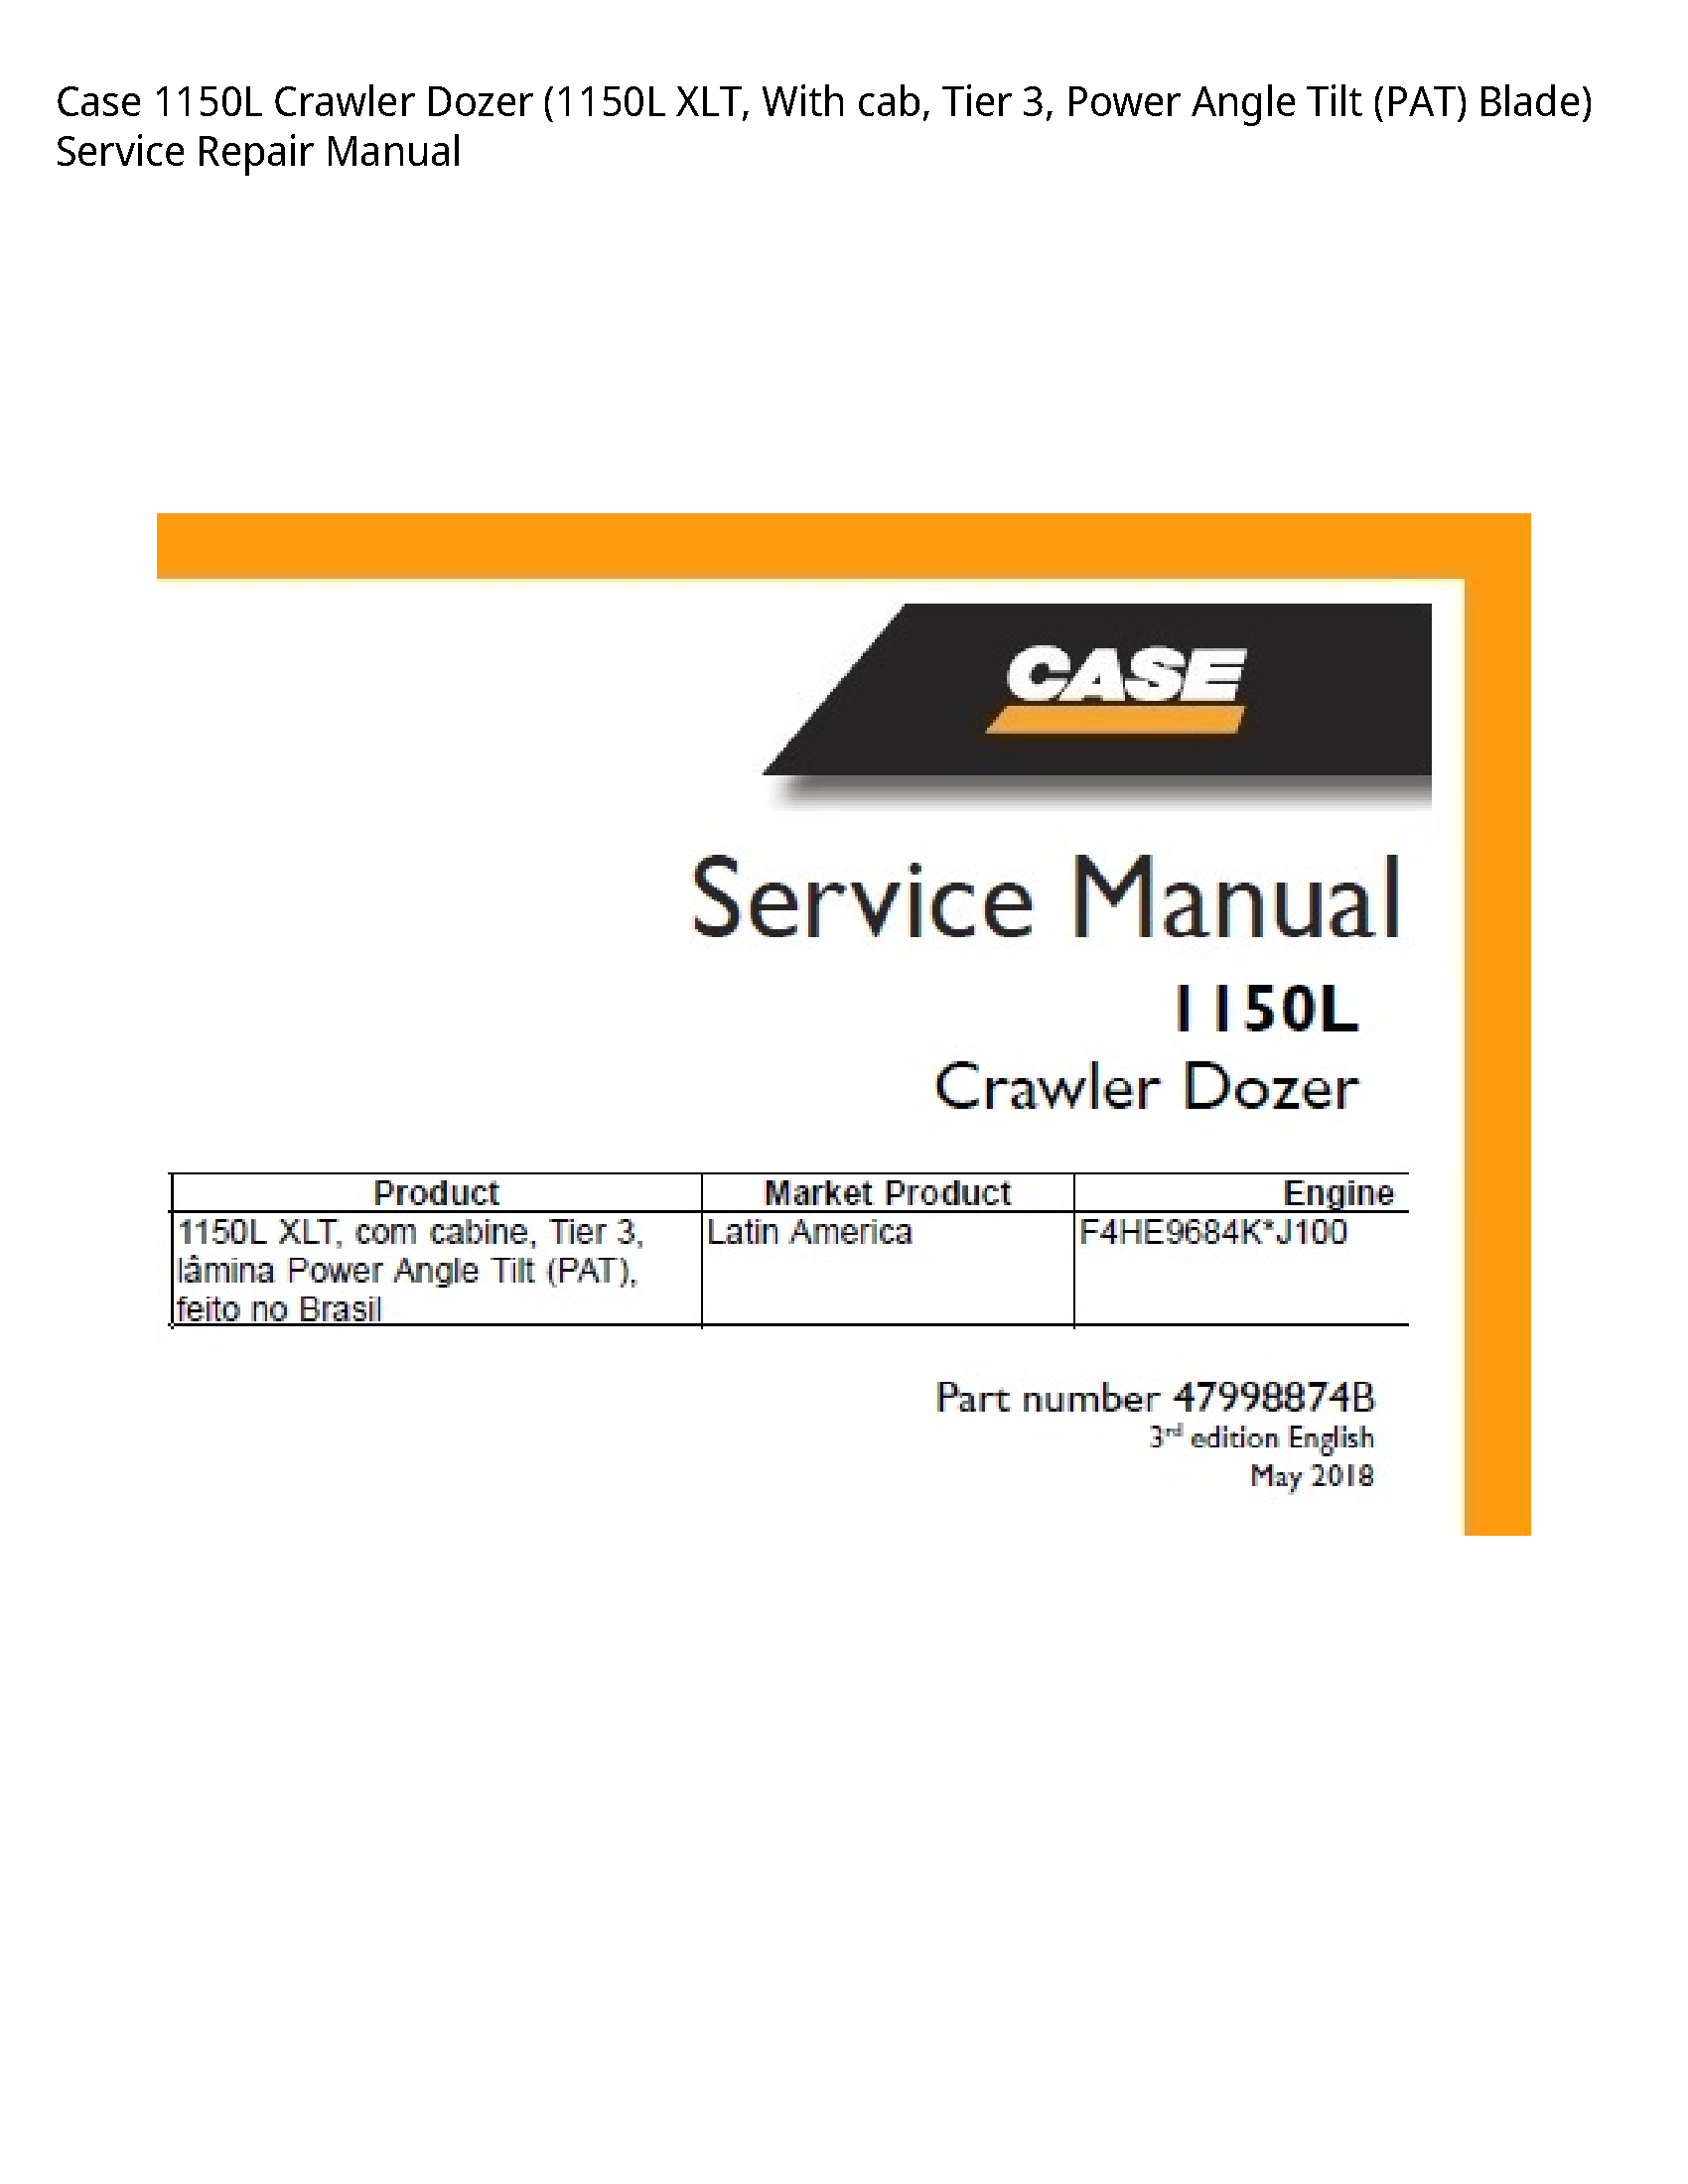 Case/Case IH 1150L Crawler Dozer XLT manual